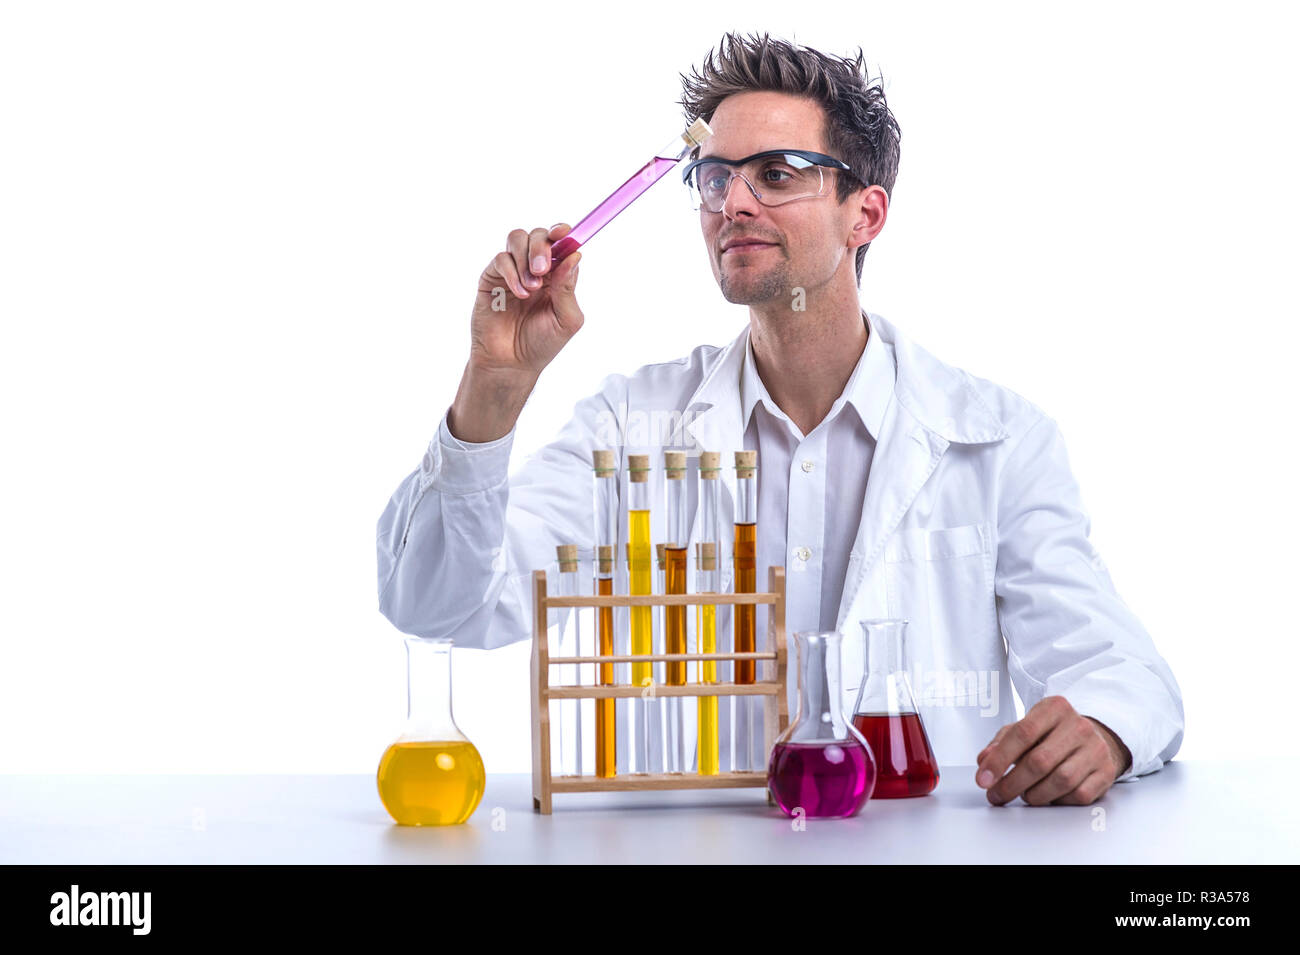 chemist in the lab Stock Photo